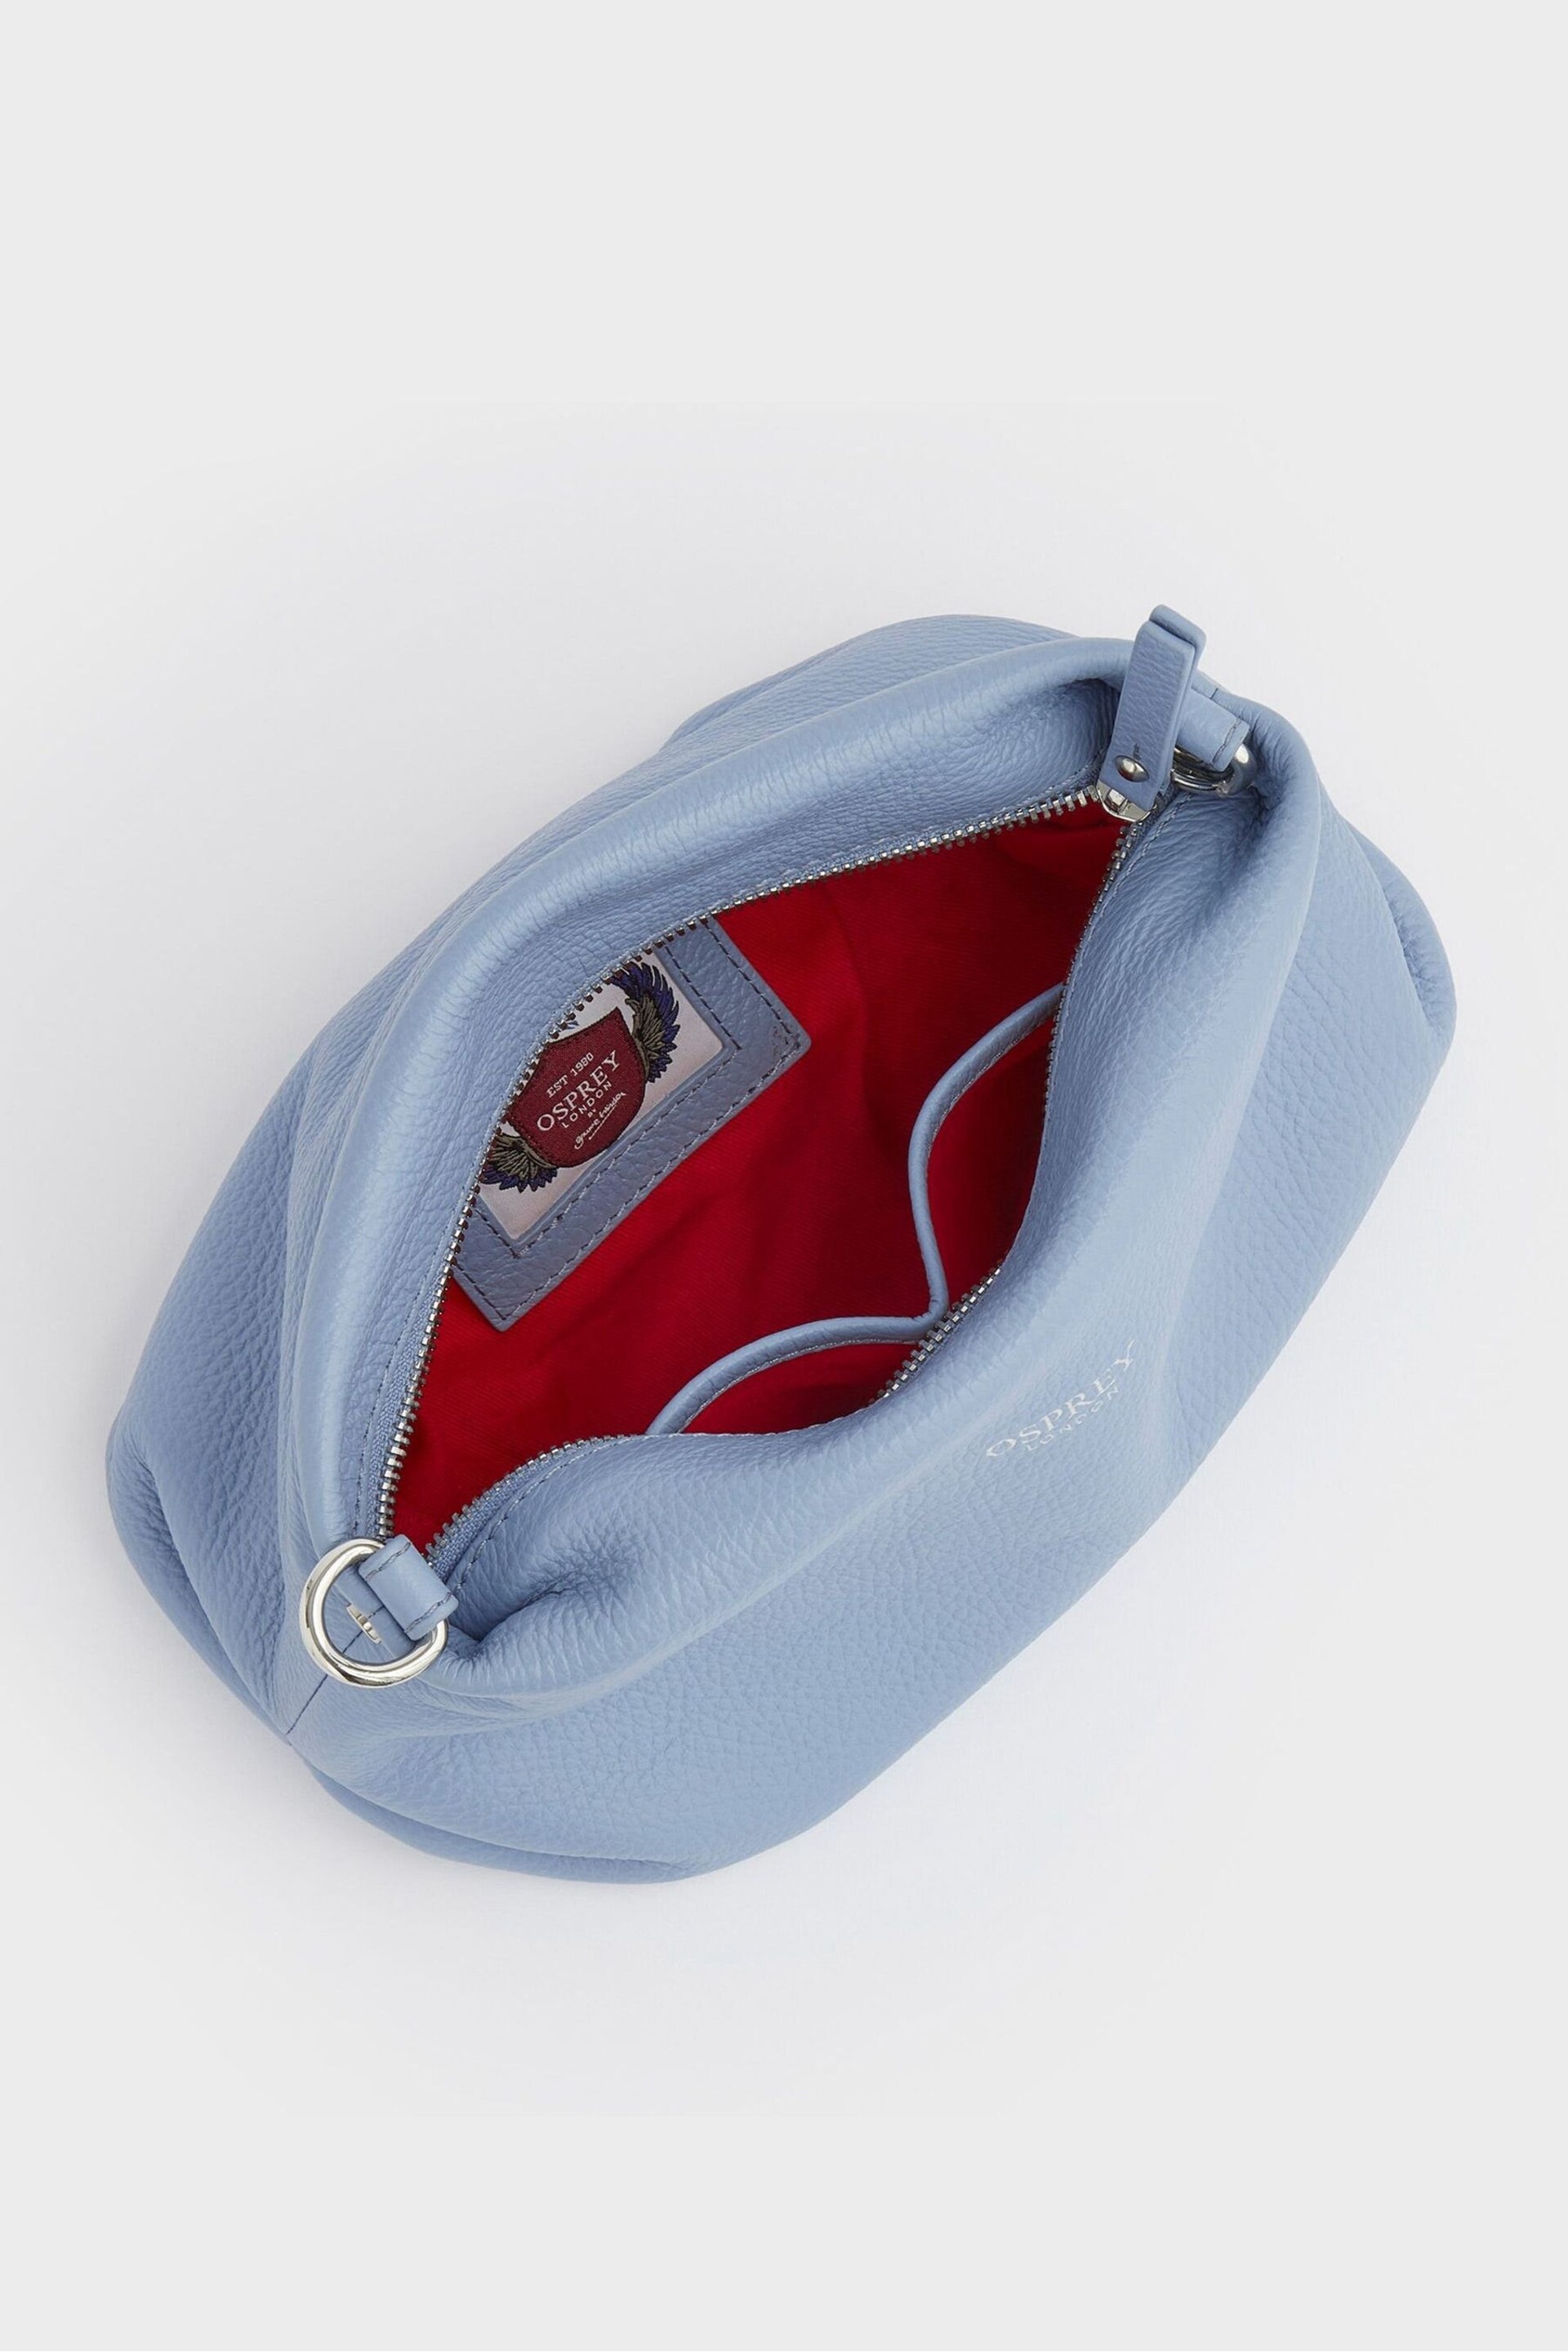 OSPREY LONDON The Carina Shrug Italian Leather Midnight Pearl Midnight Handbag - Image 3 of 5